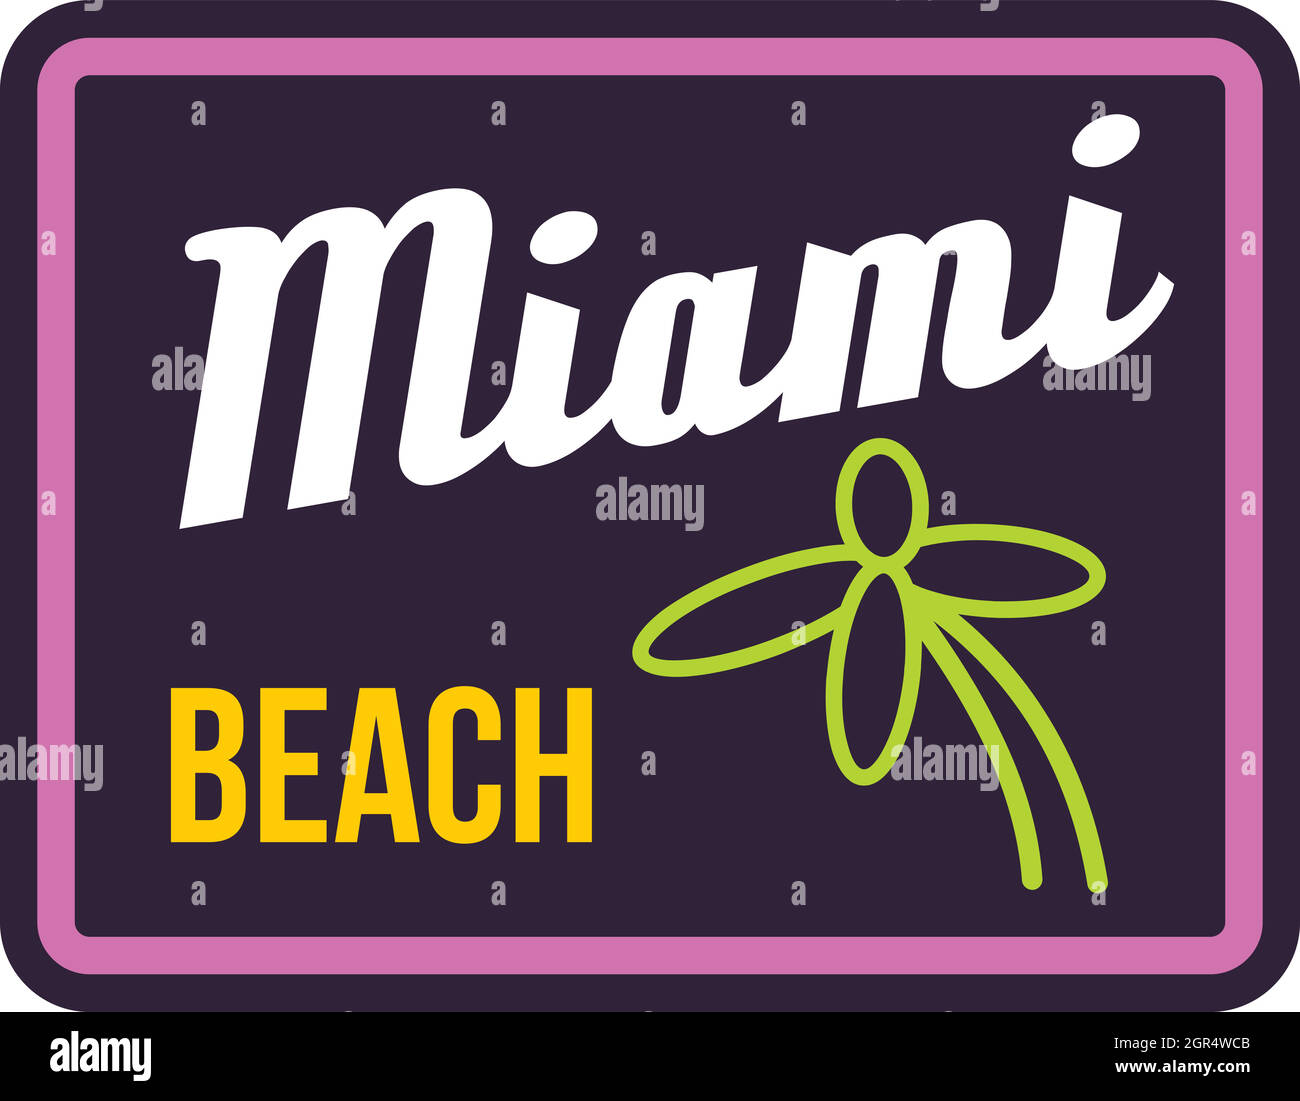 Miami beach label icon in flat style Stock Vector